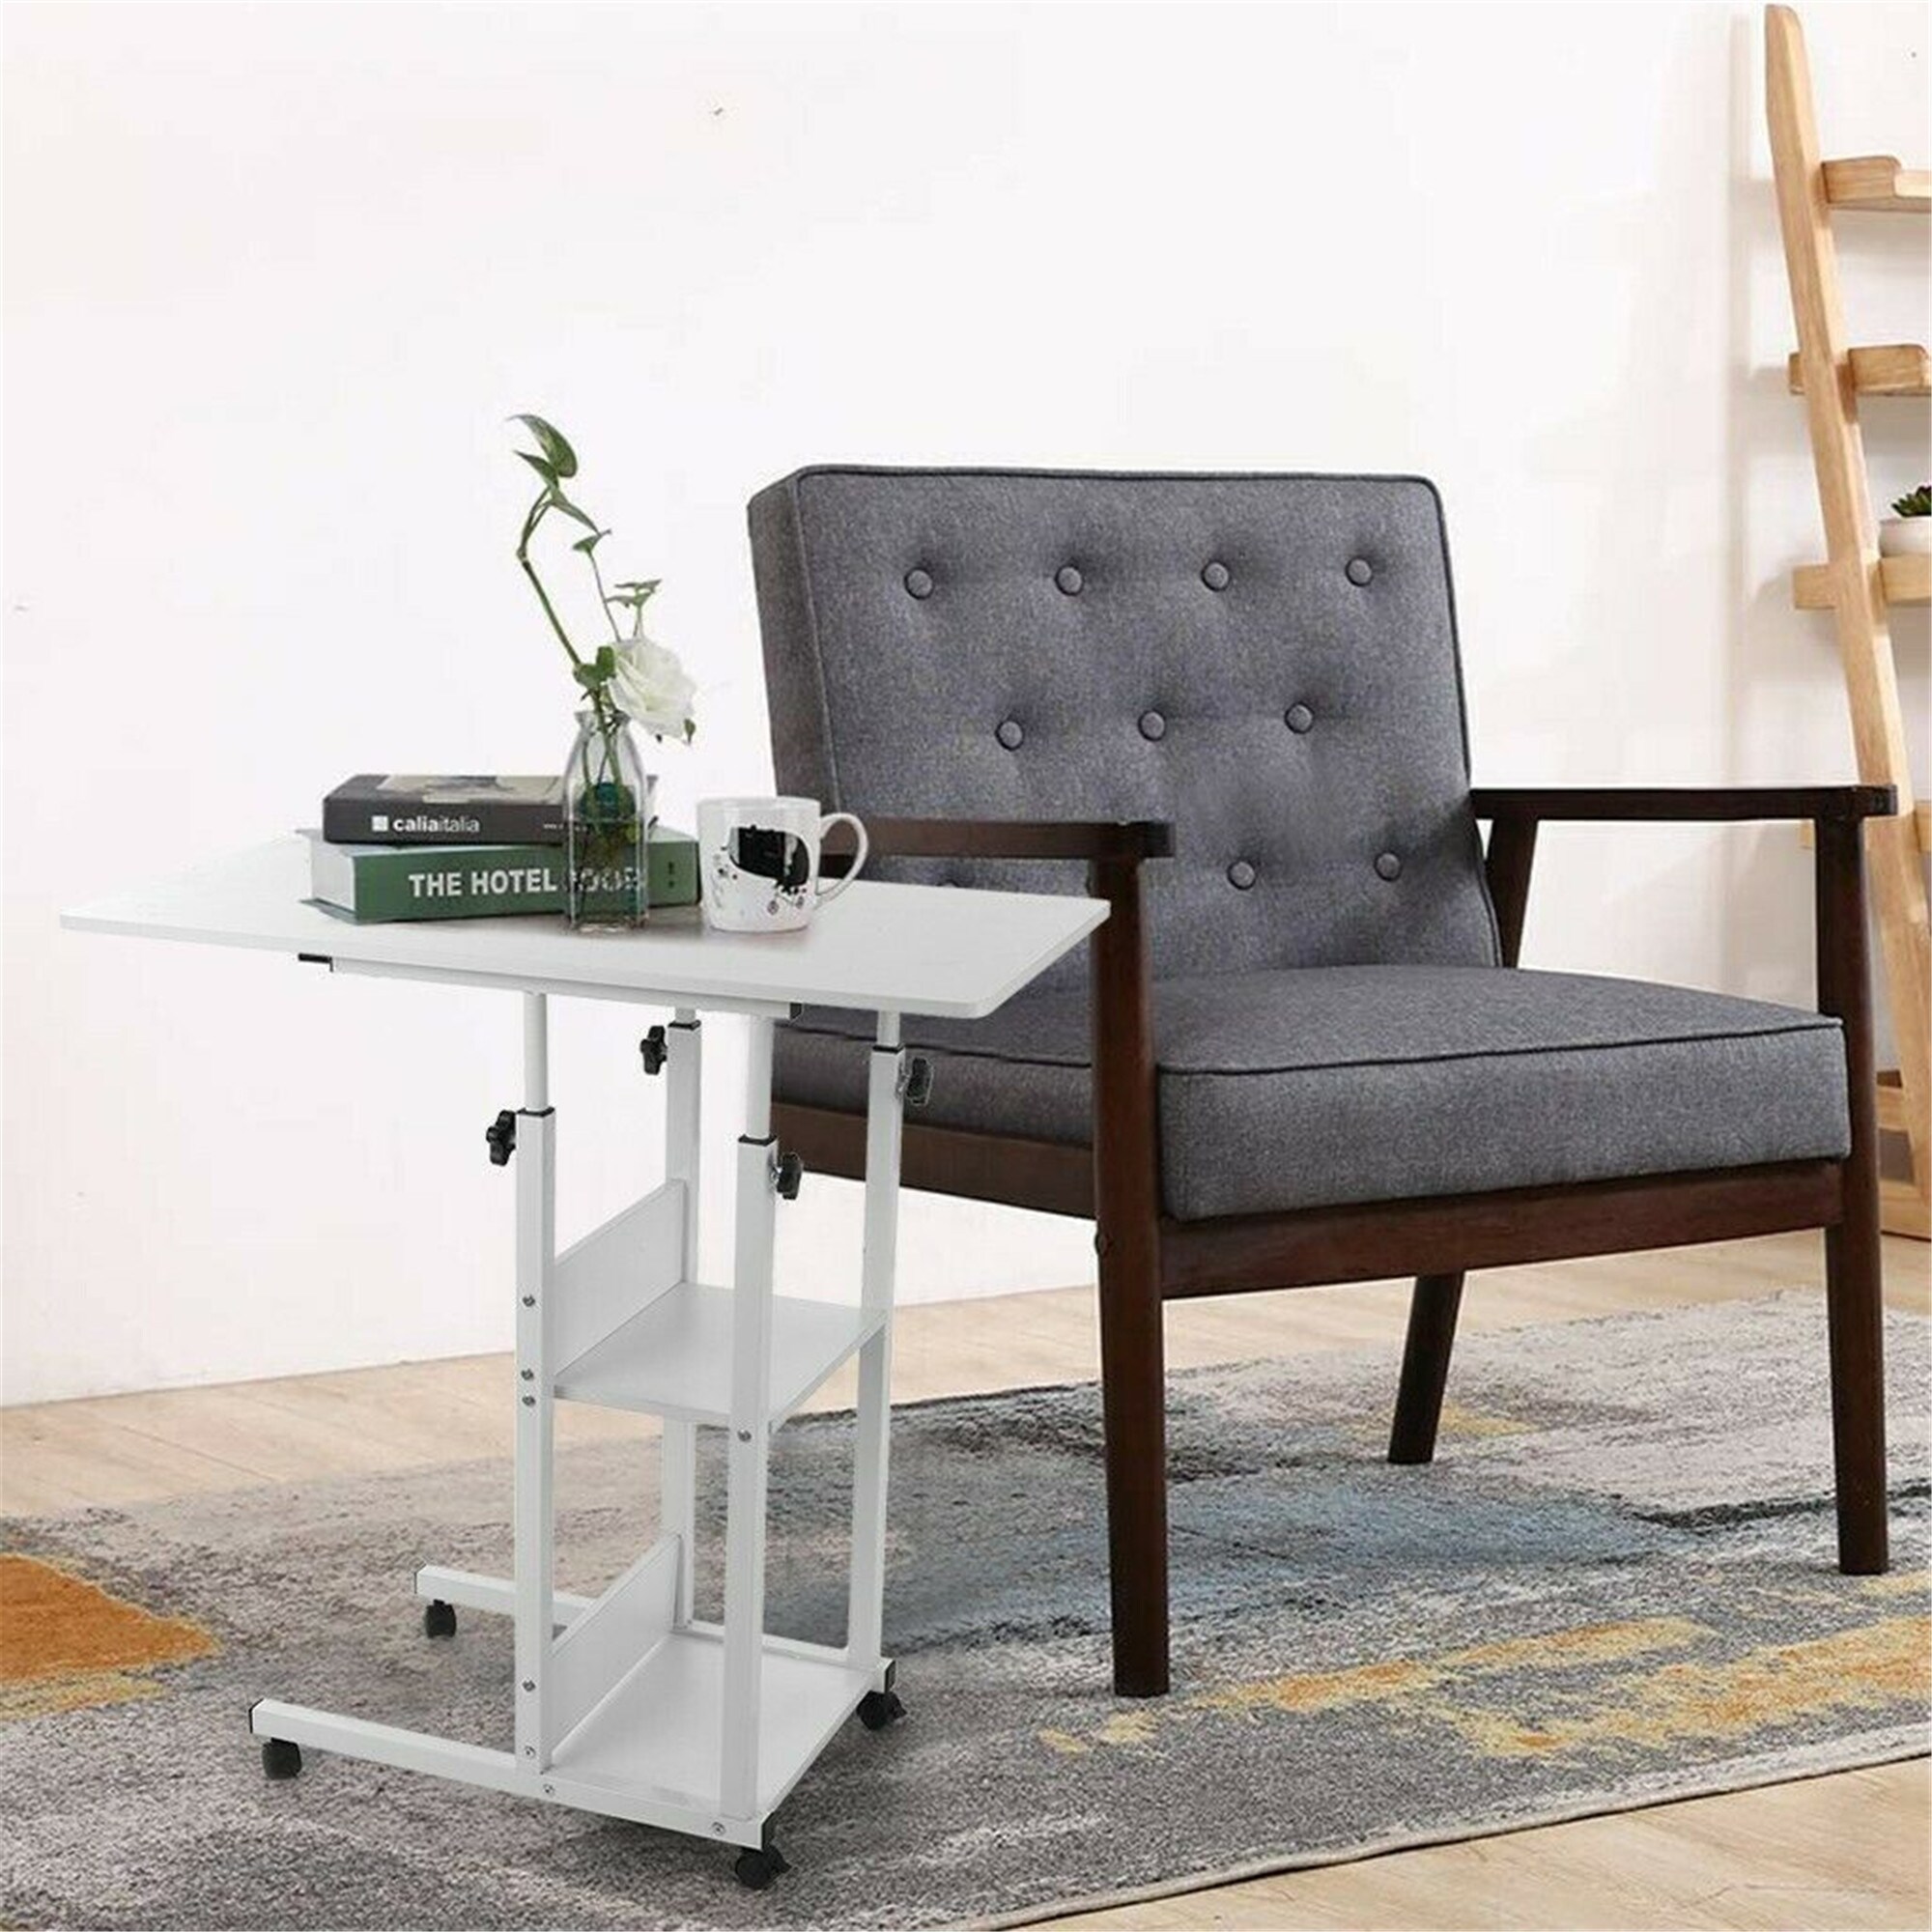 Mobile Bed Side Table Adjustable Laptop Stand Portable Computer Study Desk Q 